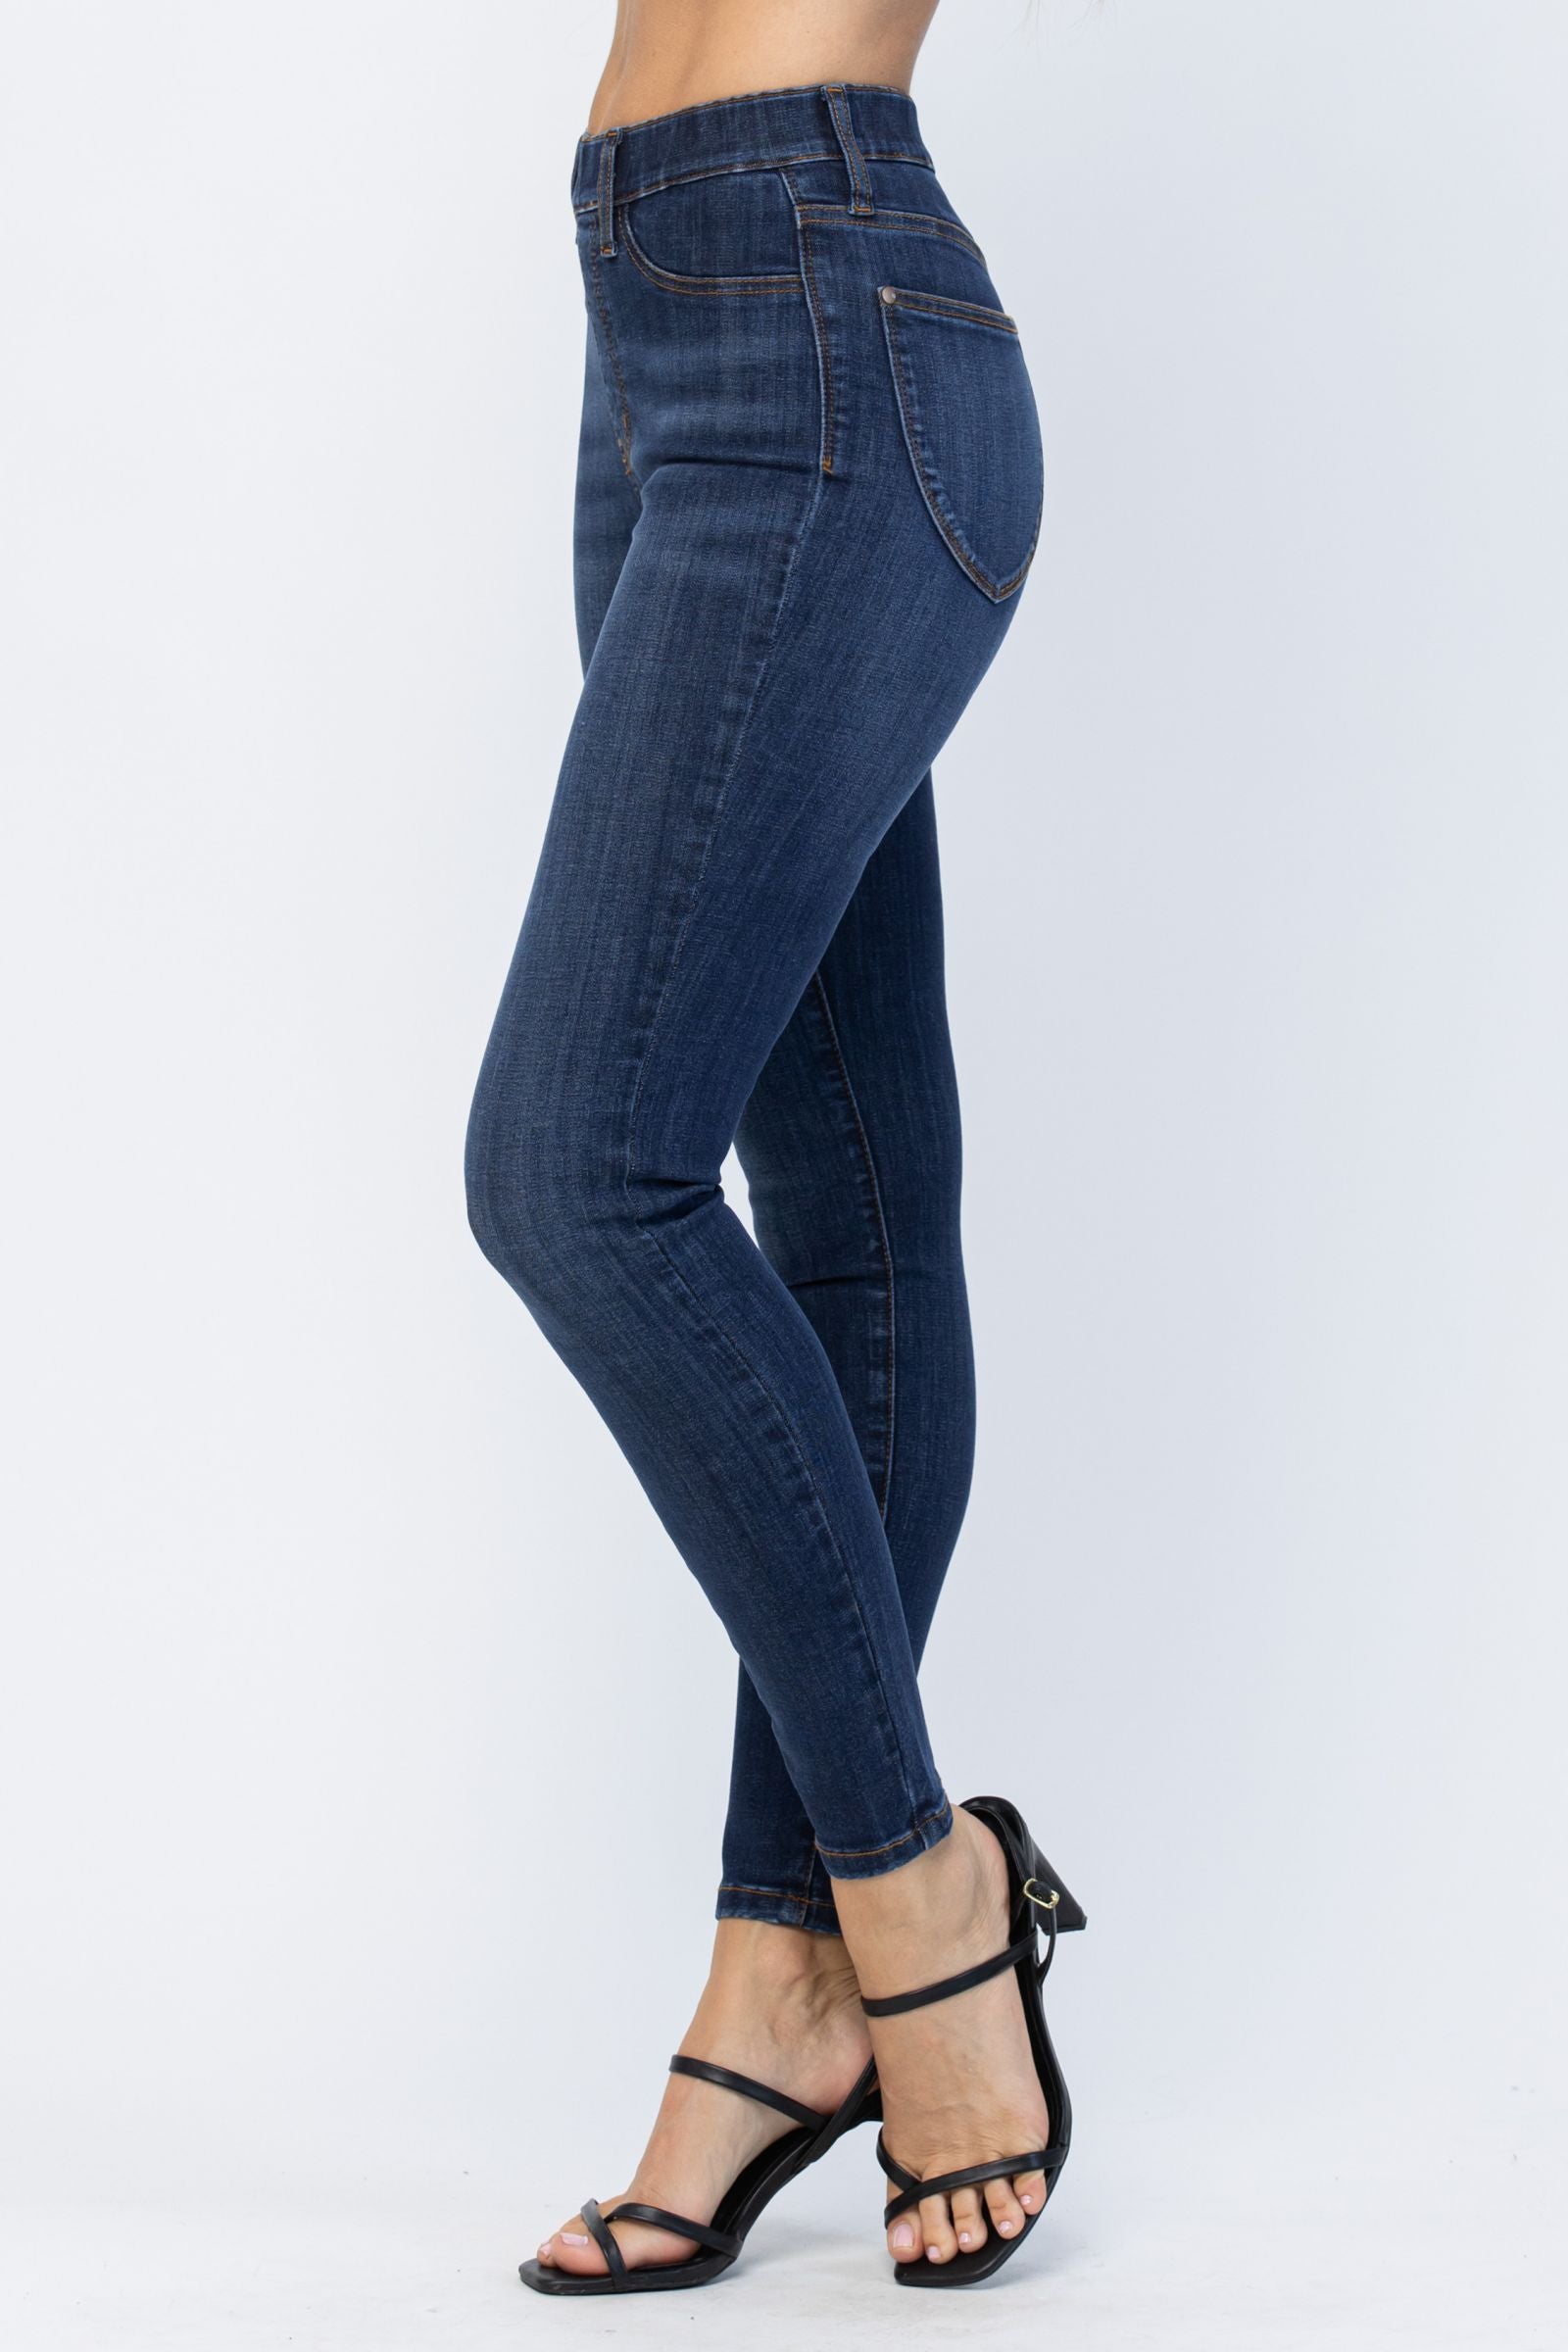 Judy Blue Emilee Skinny Jeans - Medium Wash, skinny, pull on, non distressed, curvy